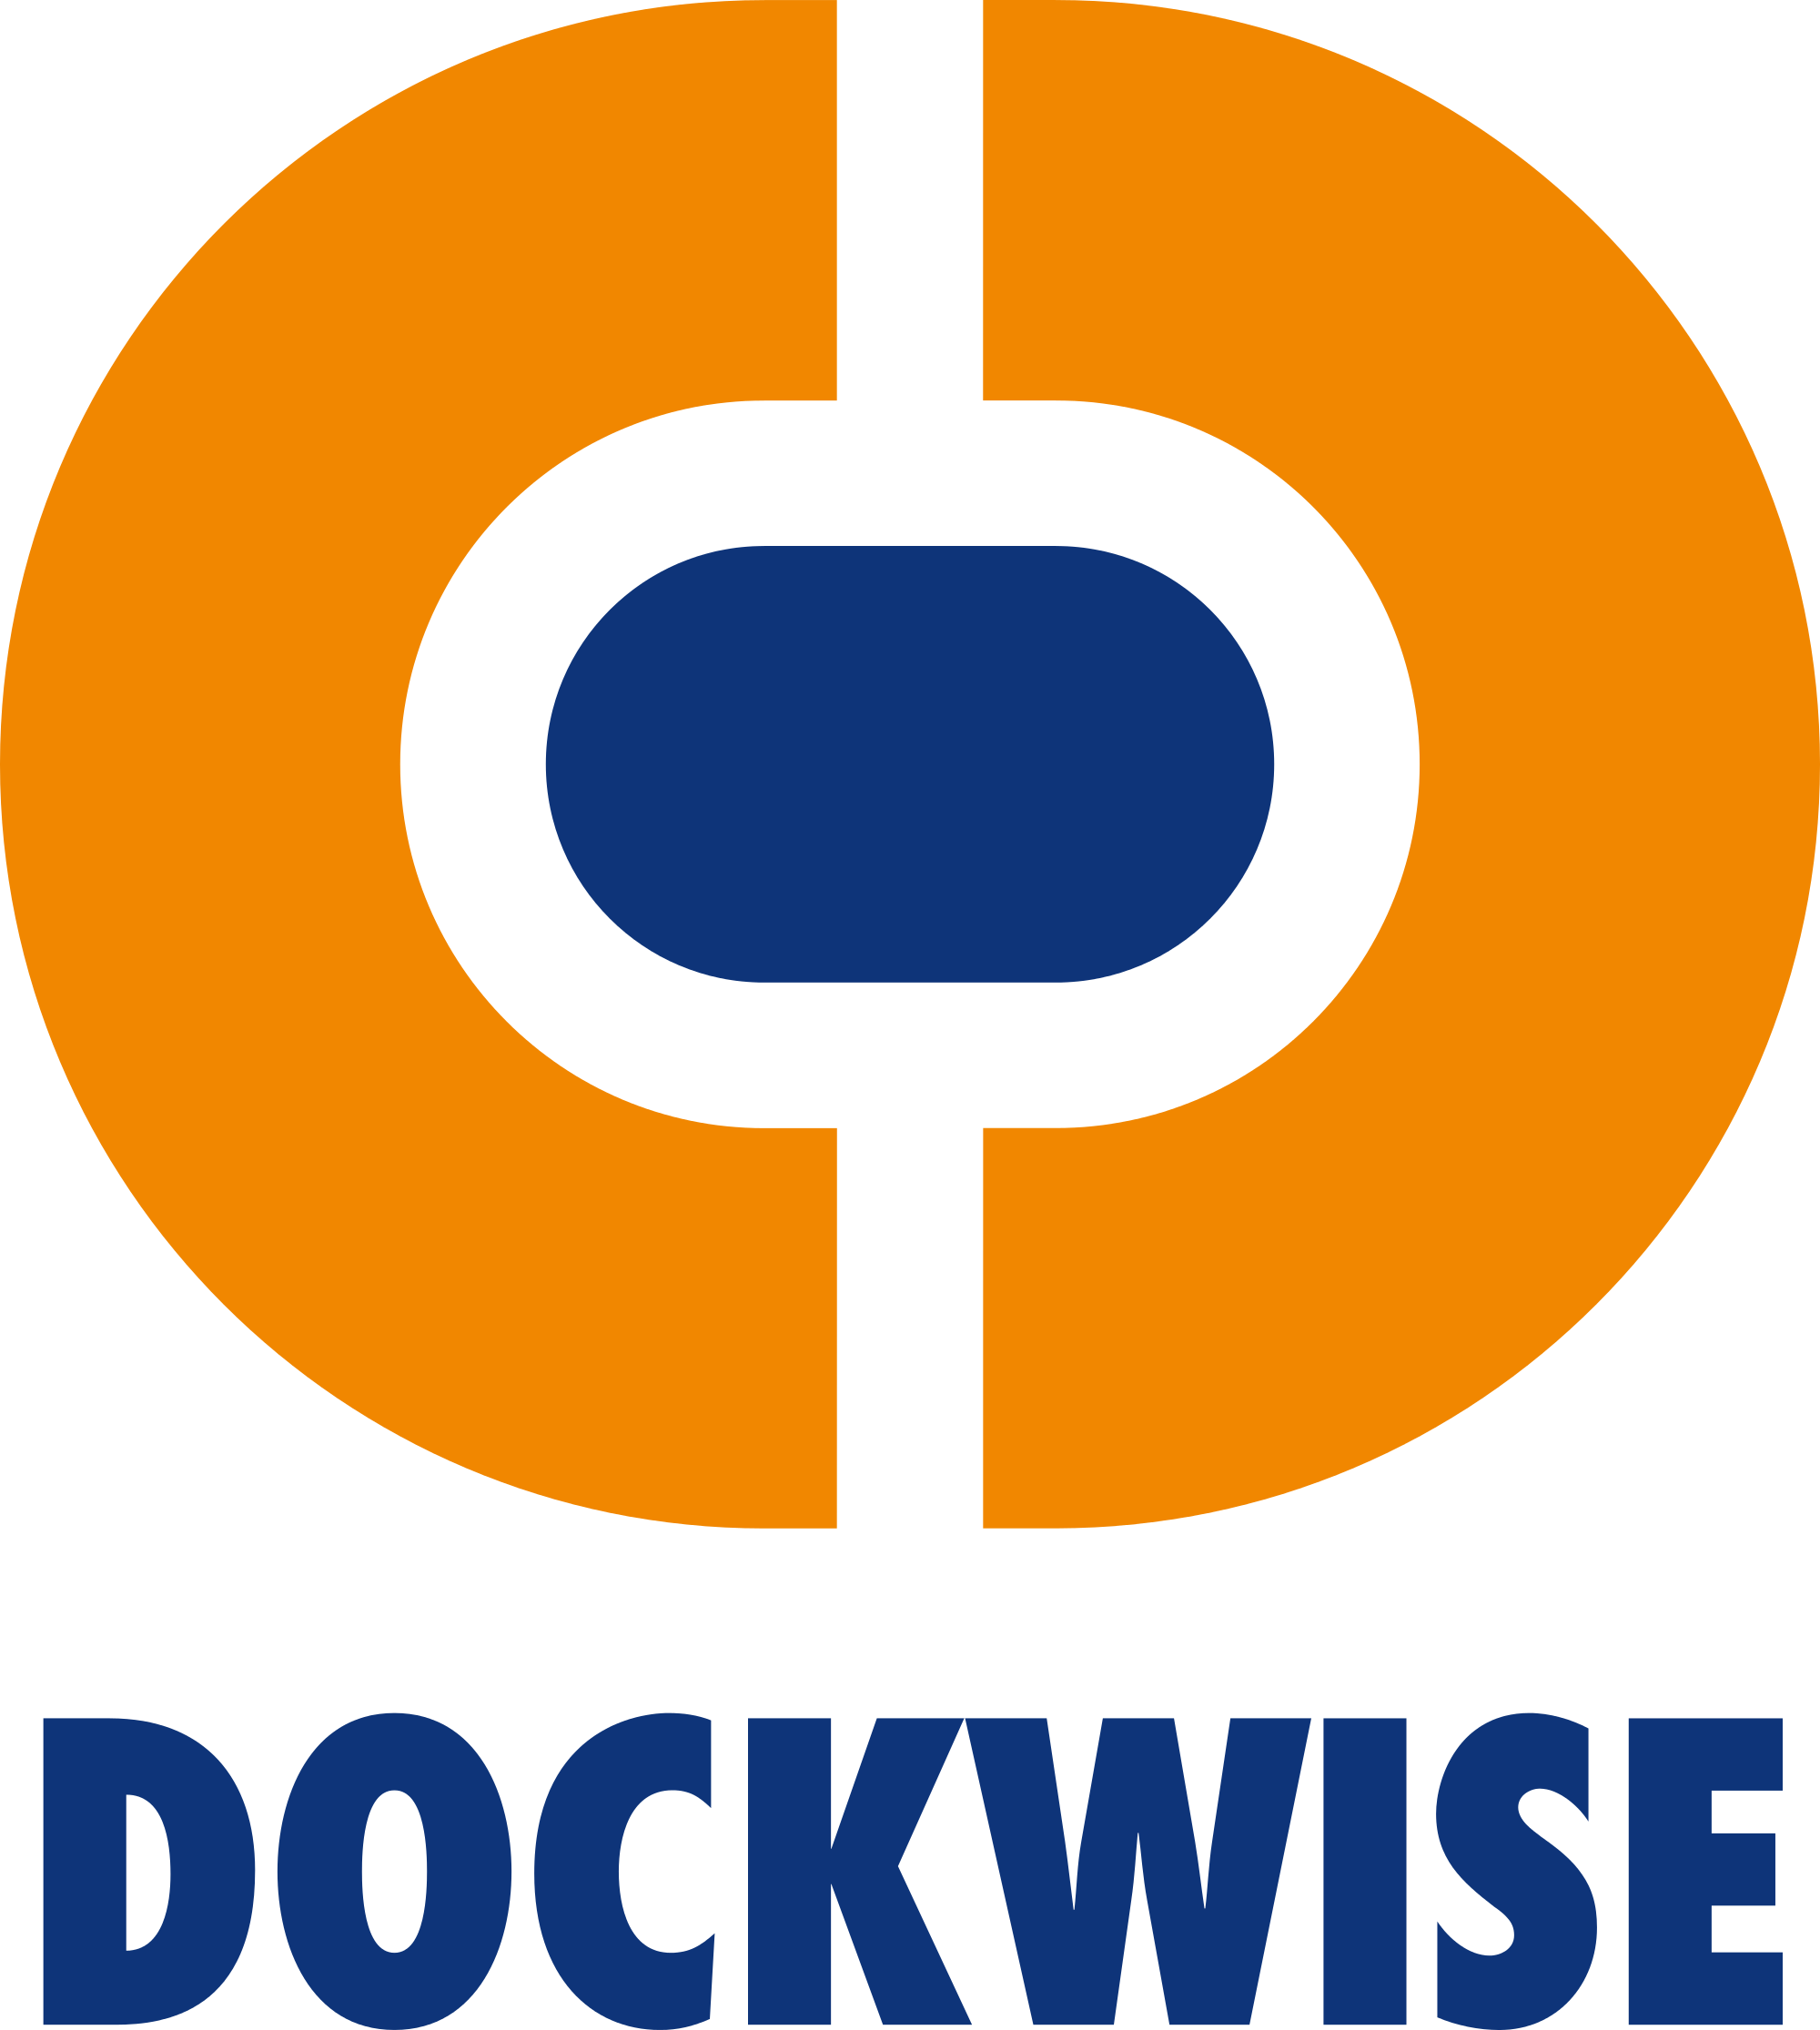 Партнеры CNGS Engineering — Dockwise (сейчас – часть Boskalis)